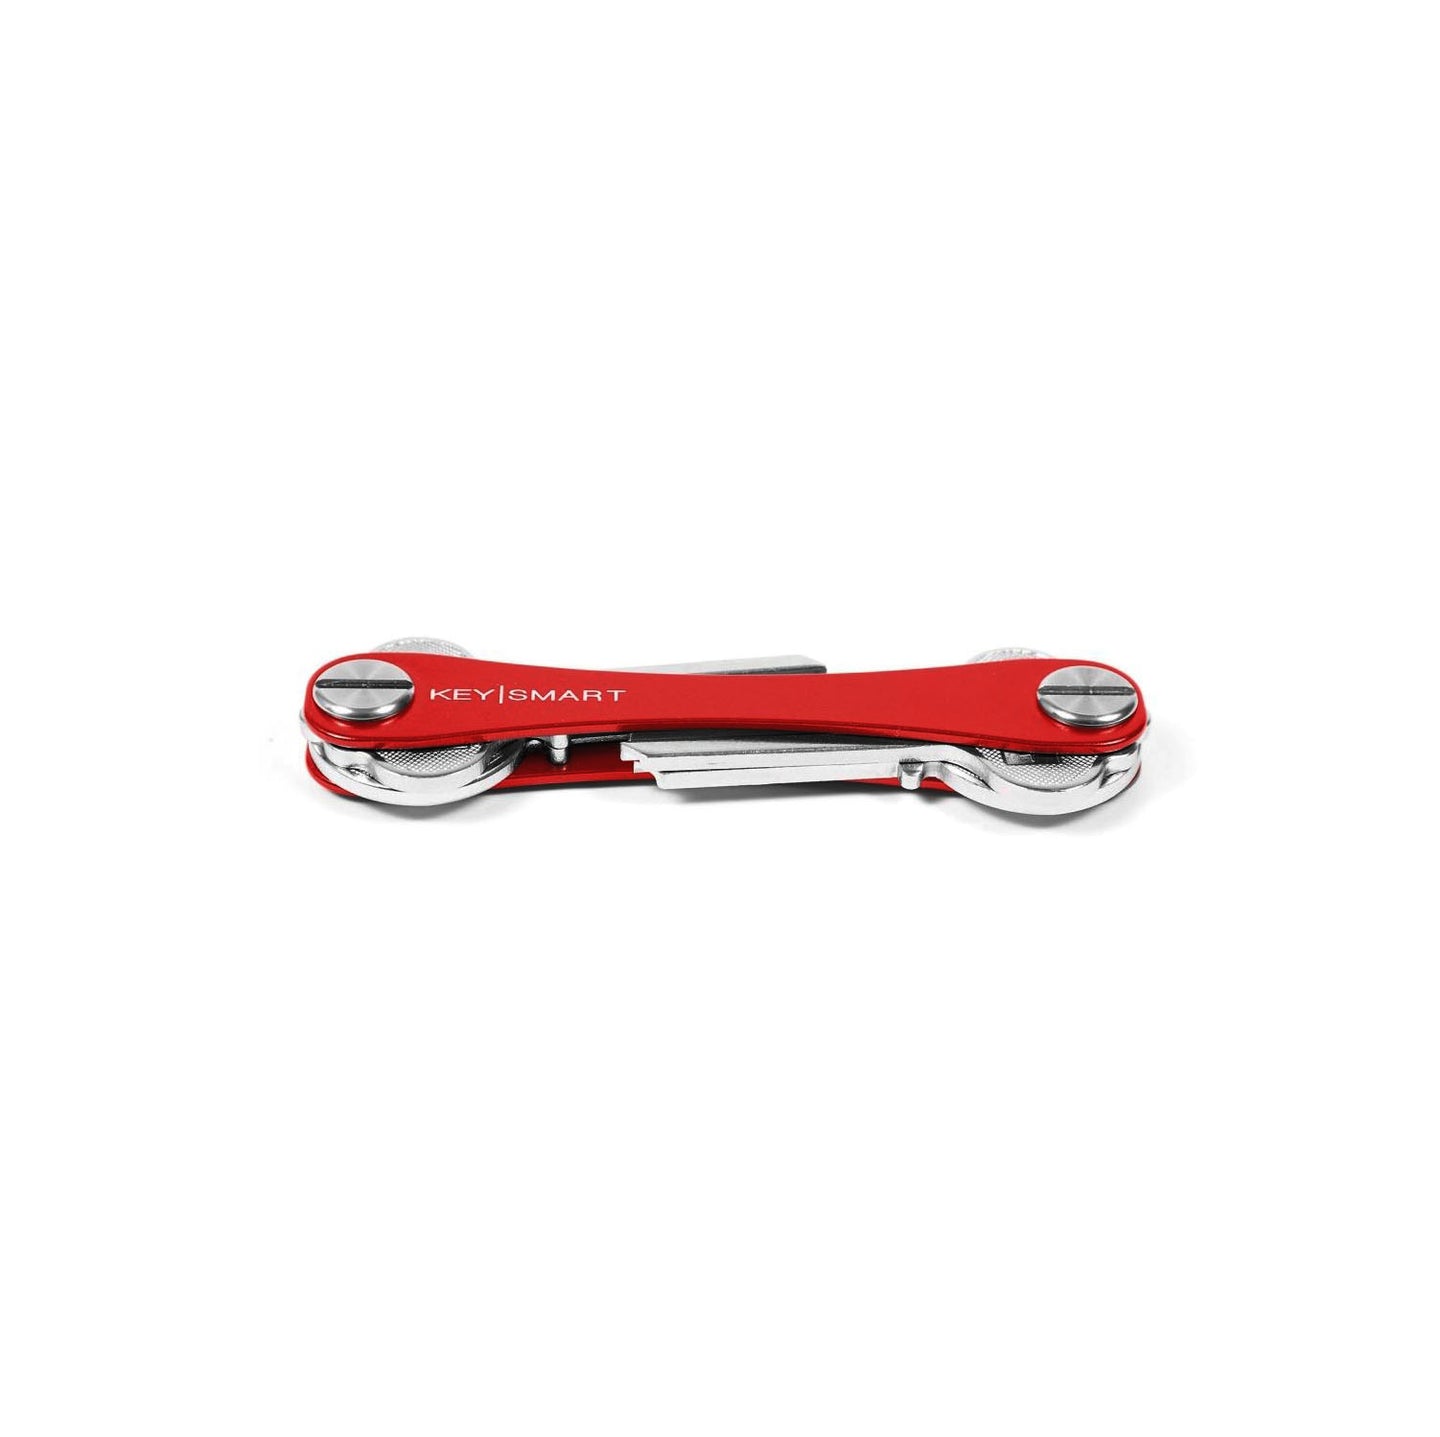 COMPRA ONLINE Portachiavi compatto Rosso Compact Key Holder KEY SMART  Bertoldi Shop